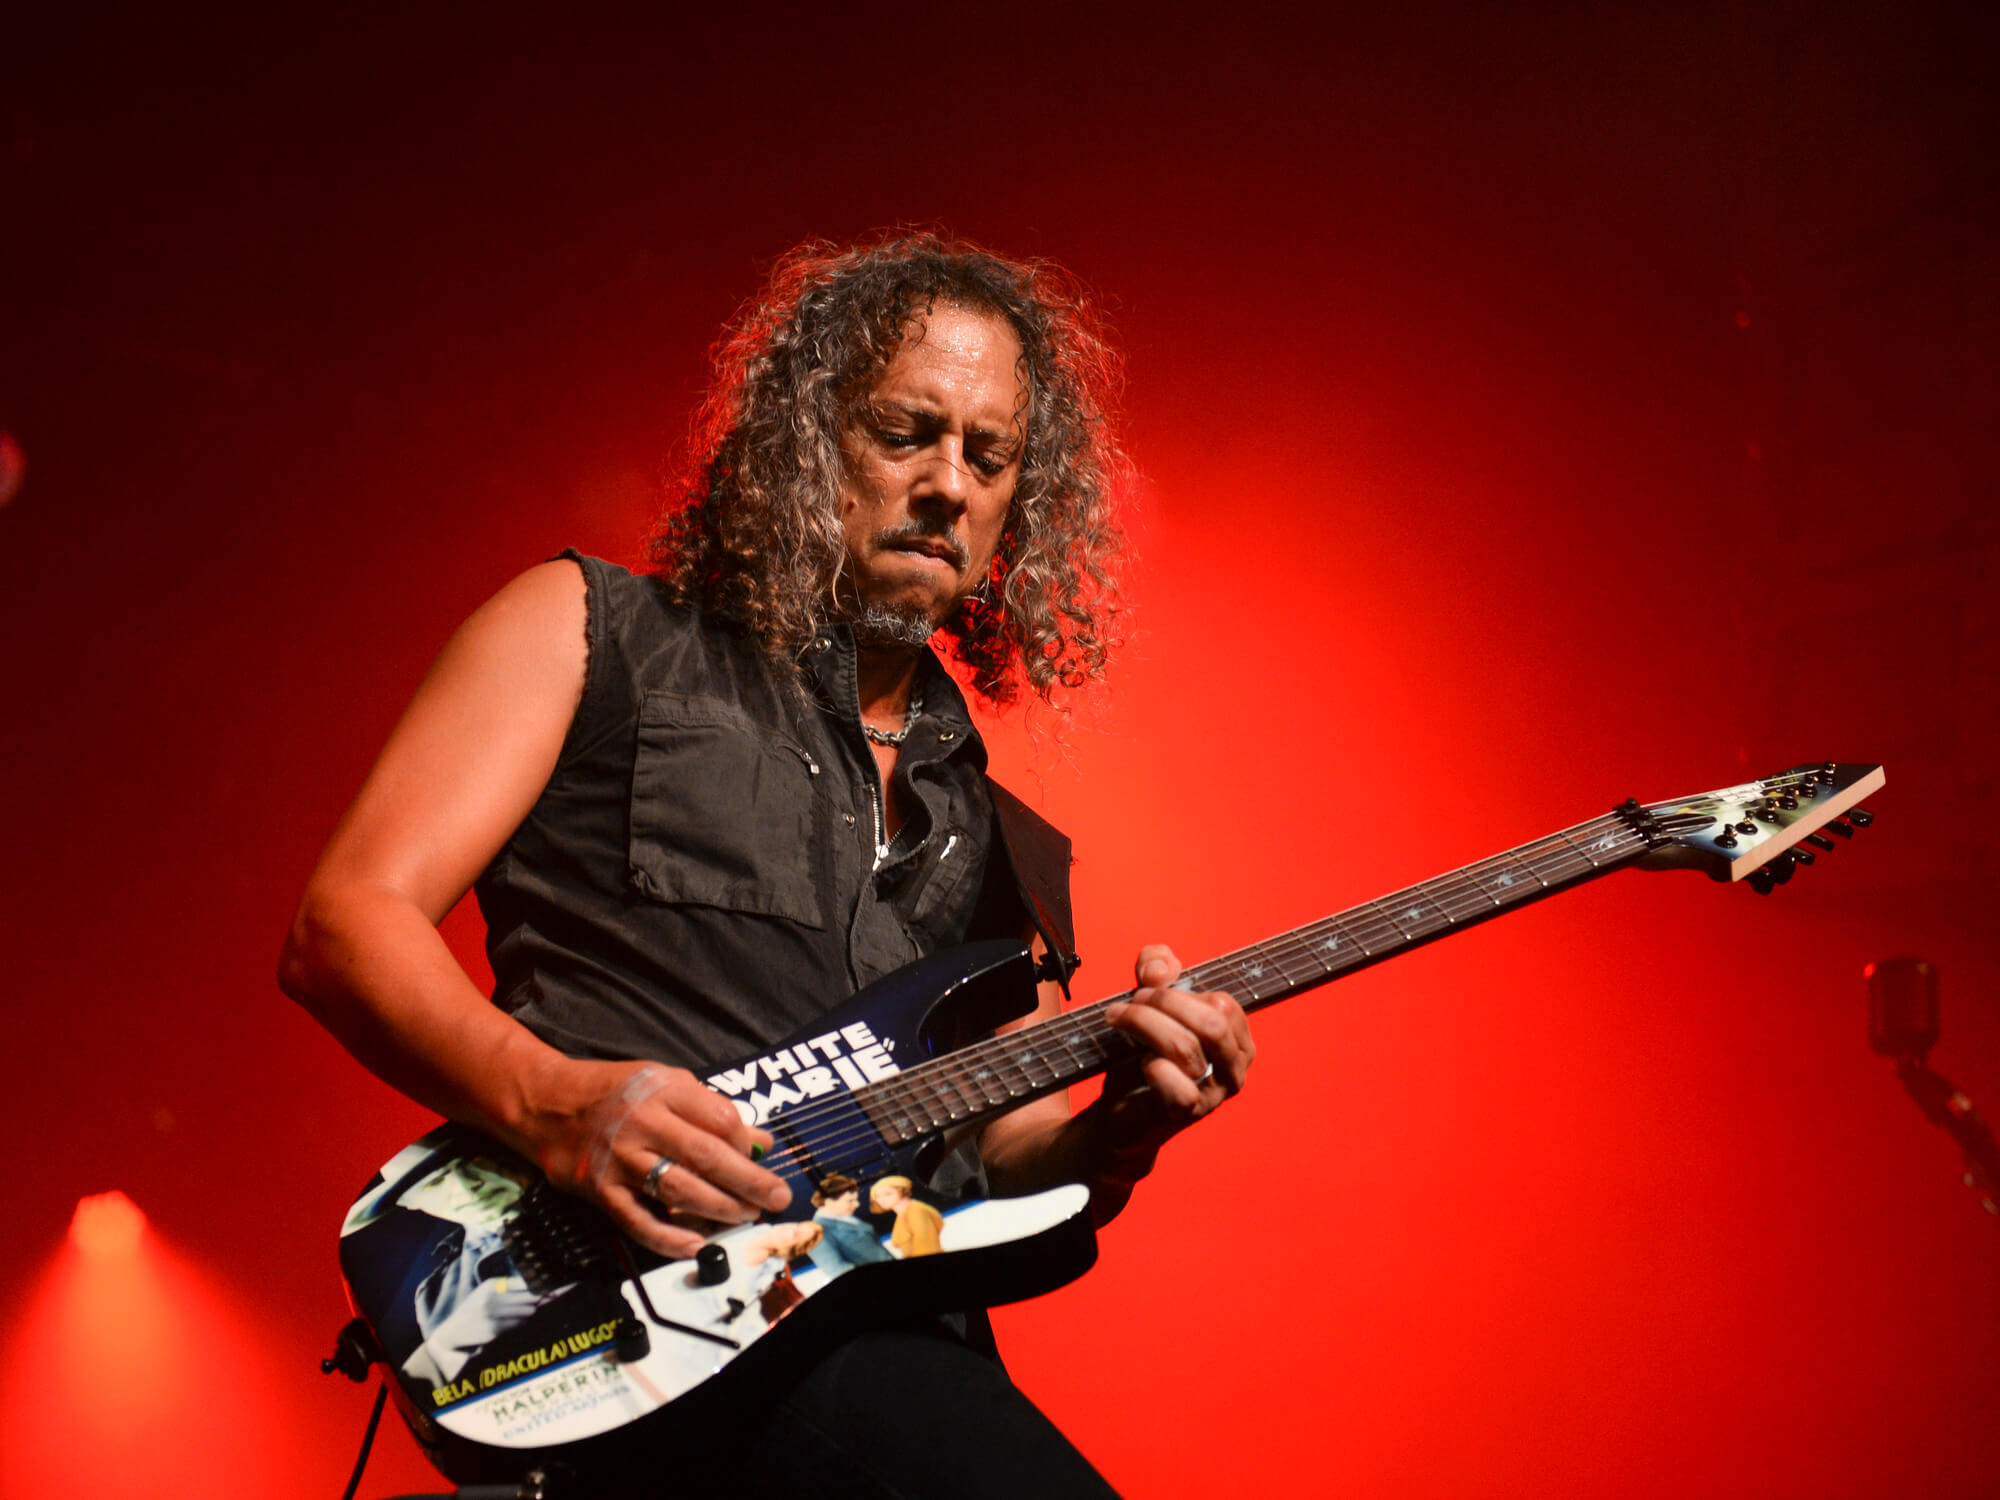 Kirk Hammett of Metallica playing the guitar